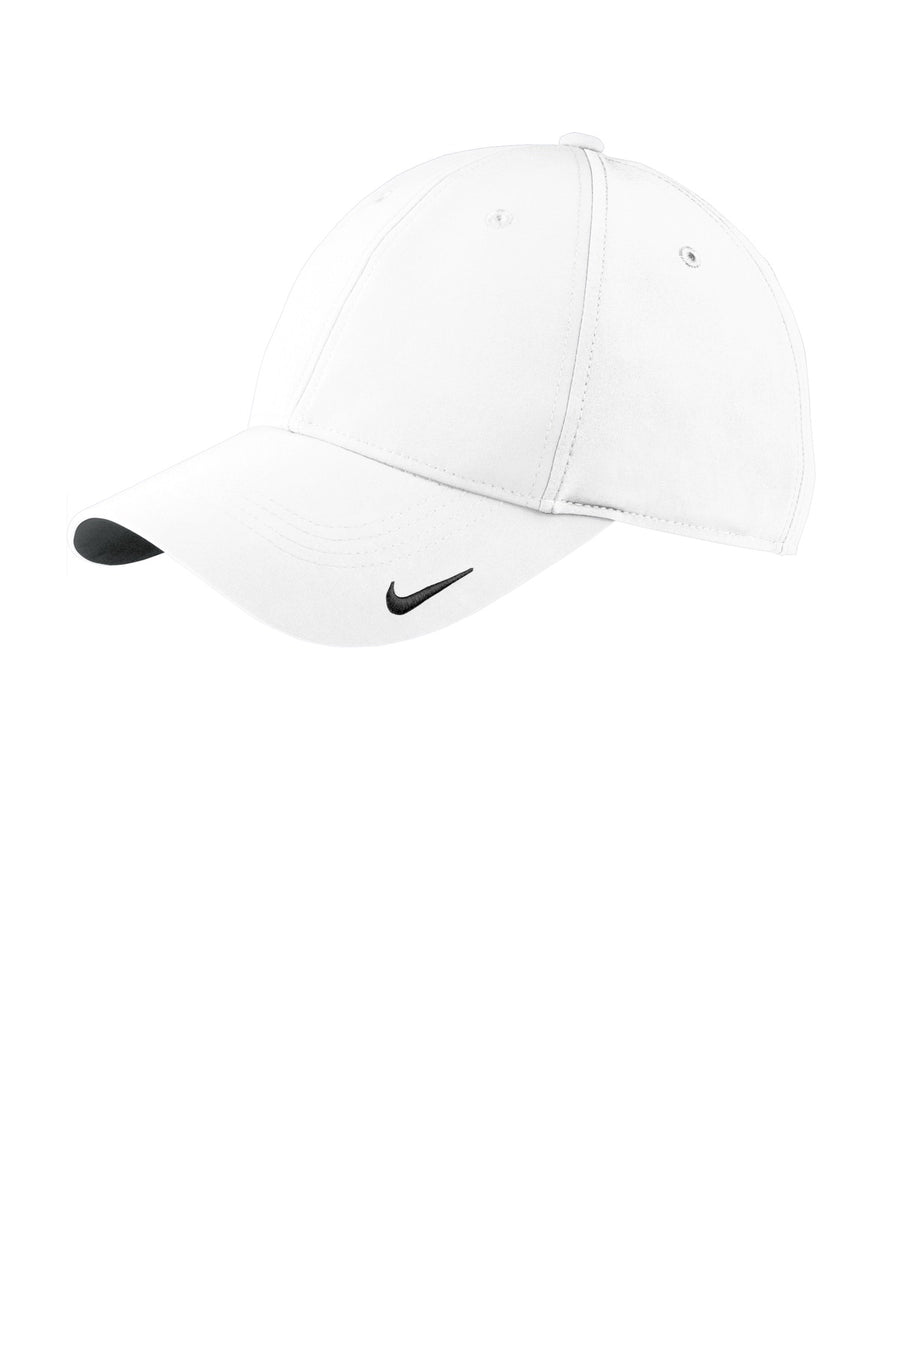 Nike Swoosh Legacy 91 Cap.